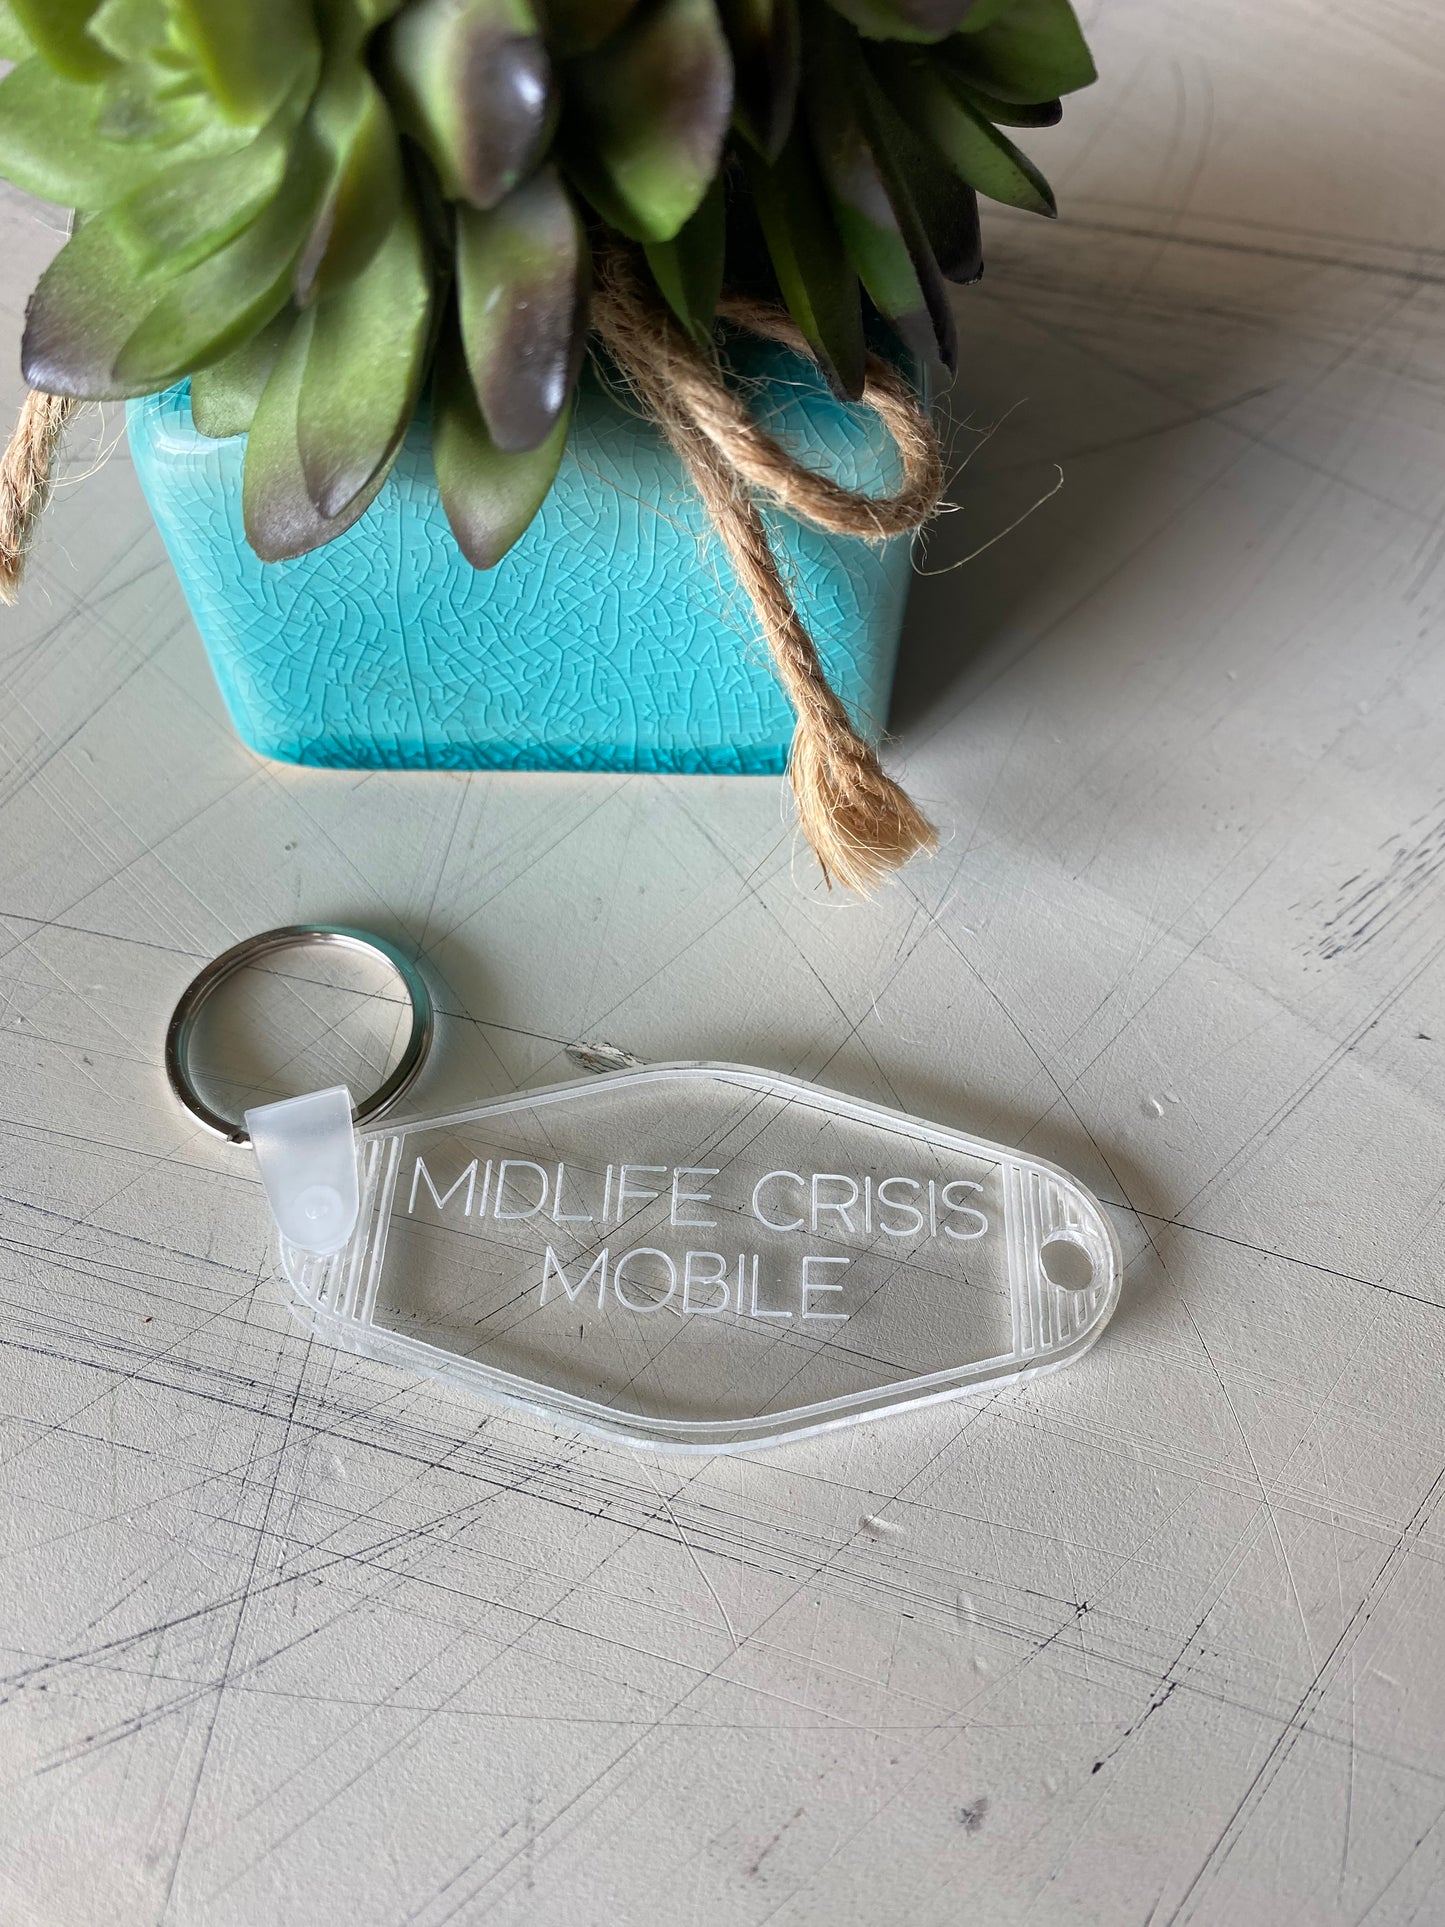 Midlife Crisis Mobile - acrylic motel-style keychain - Novotny Designs